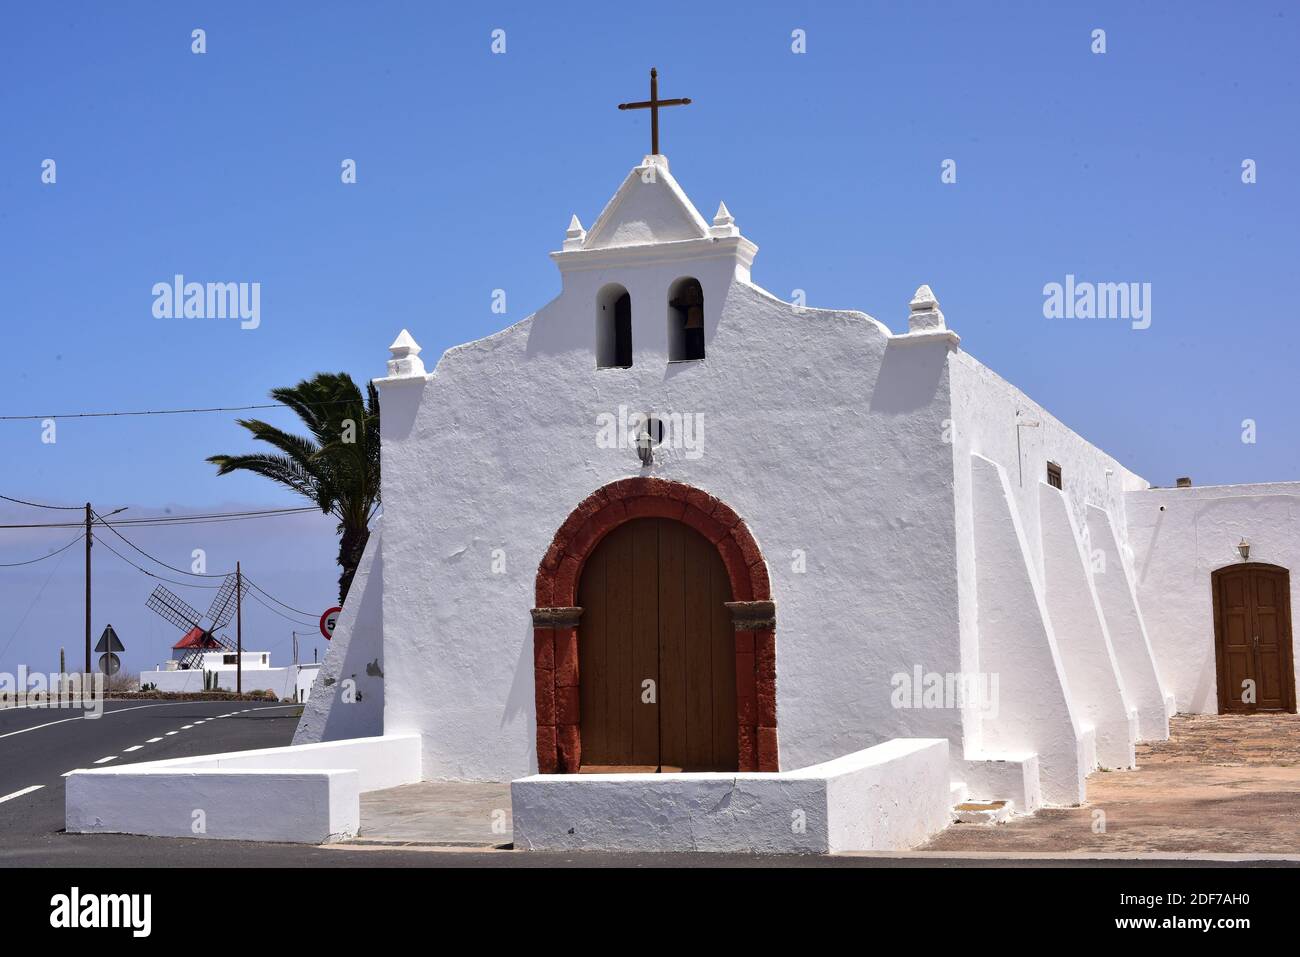 Tiagua Einsiedelei. Teguise, Lanzarote Island, Kanarische Inseln, Spanien. Stockfoto